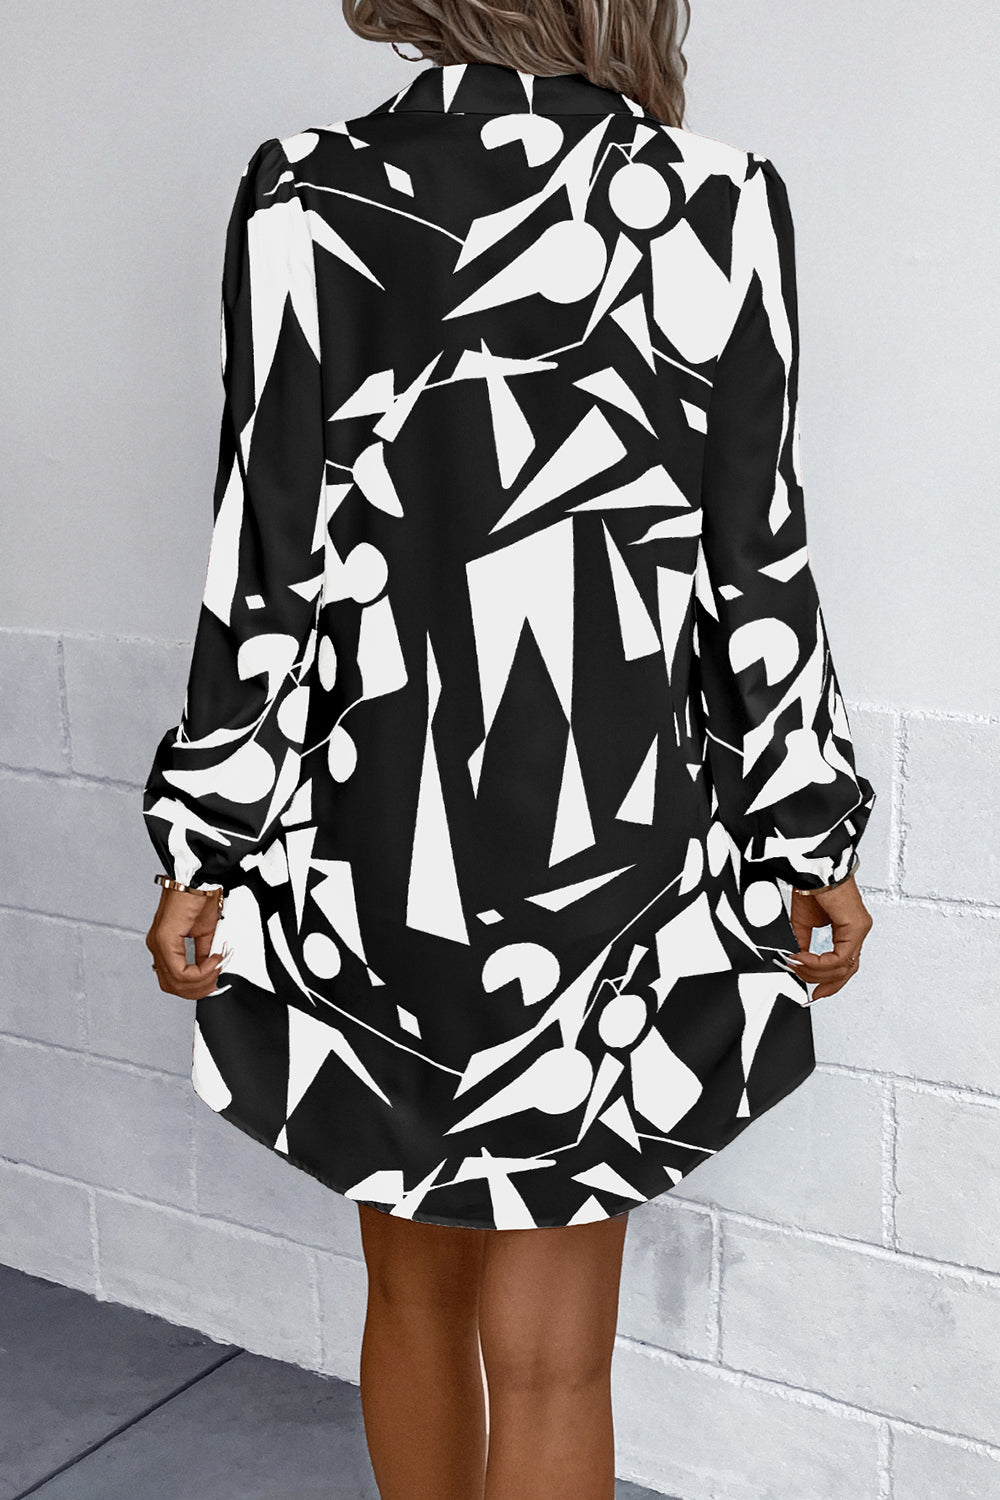 Coco Geometric Long Sleeve Shirt Dress - Coco and lulu boutique 